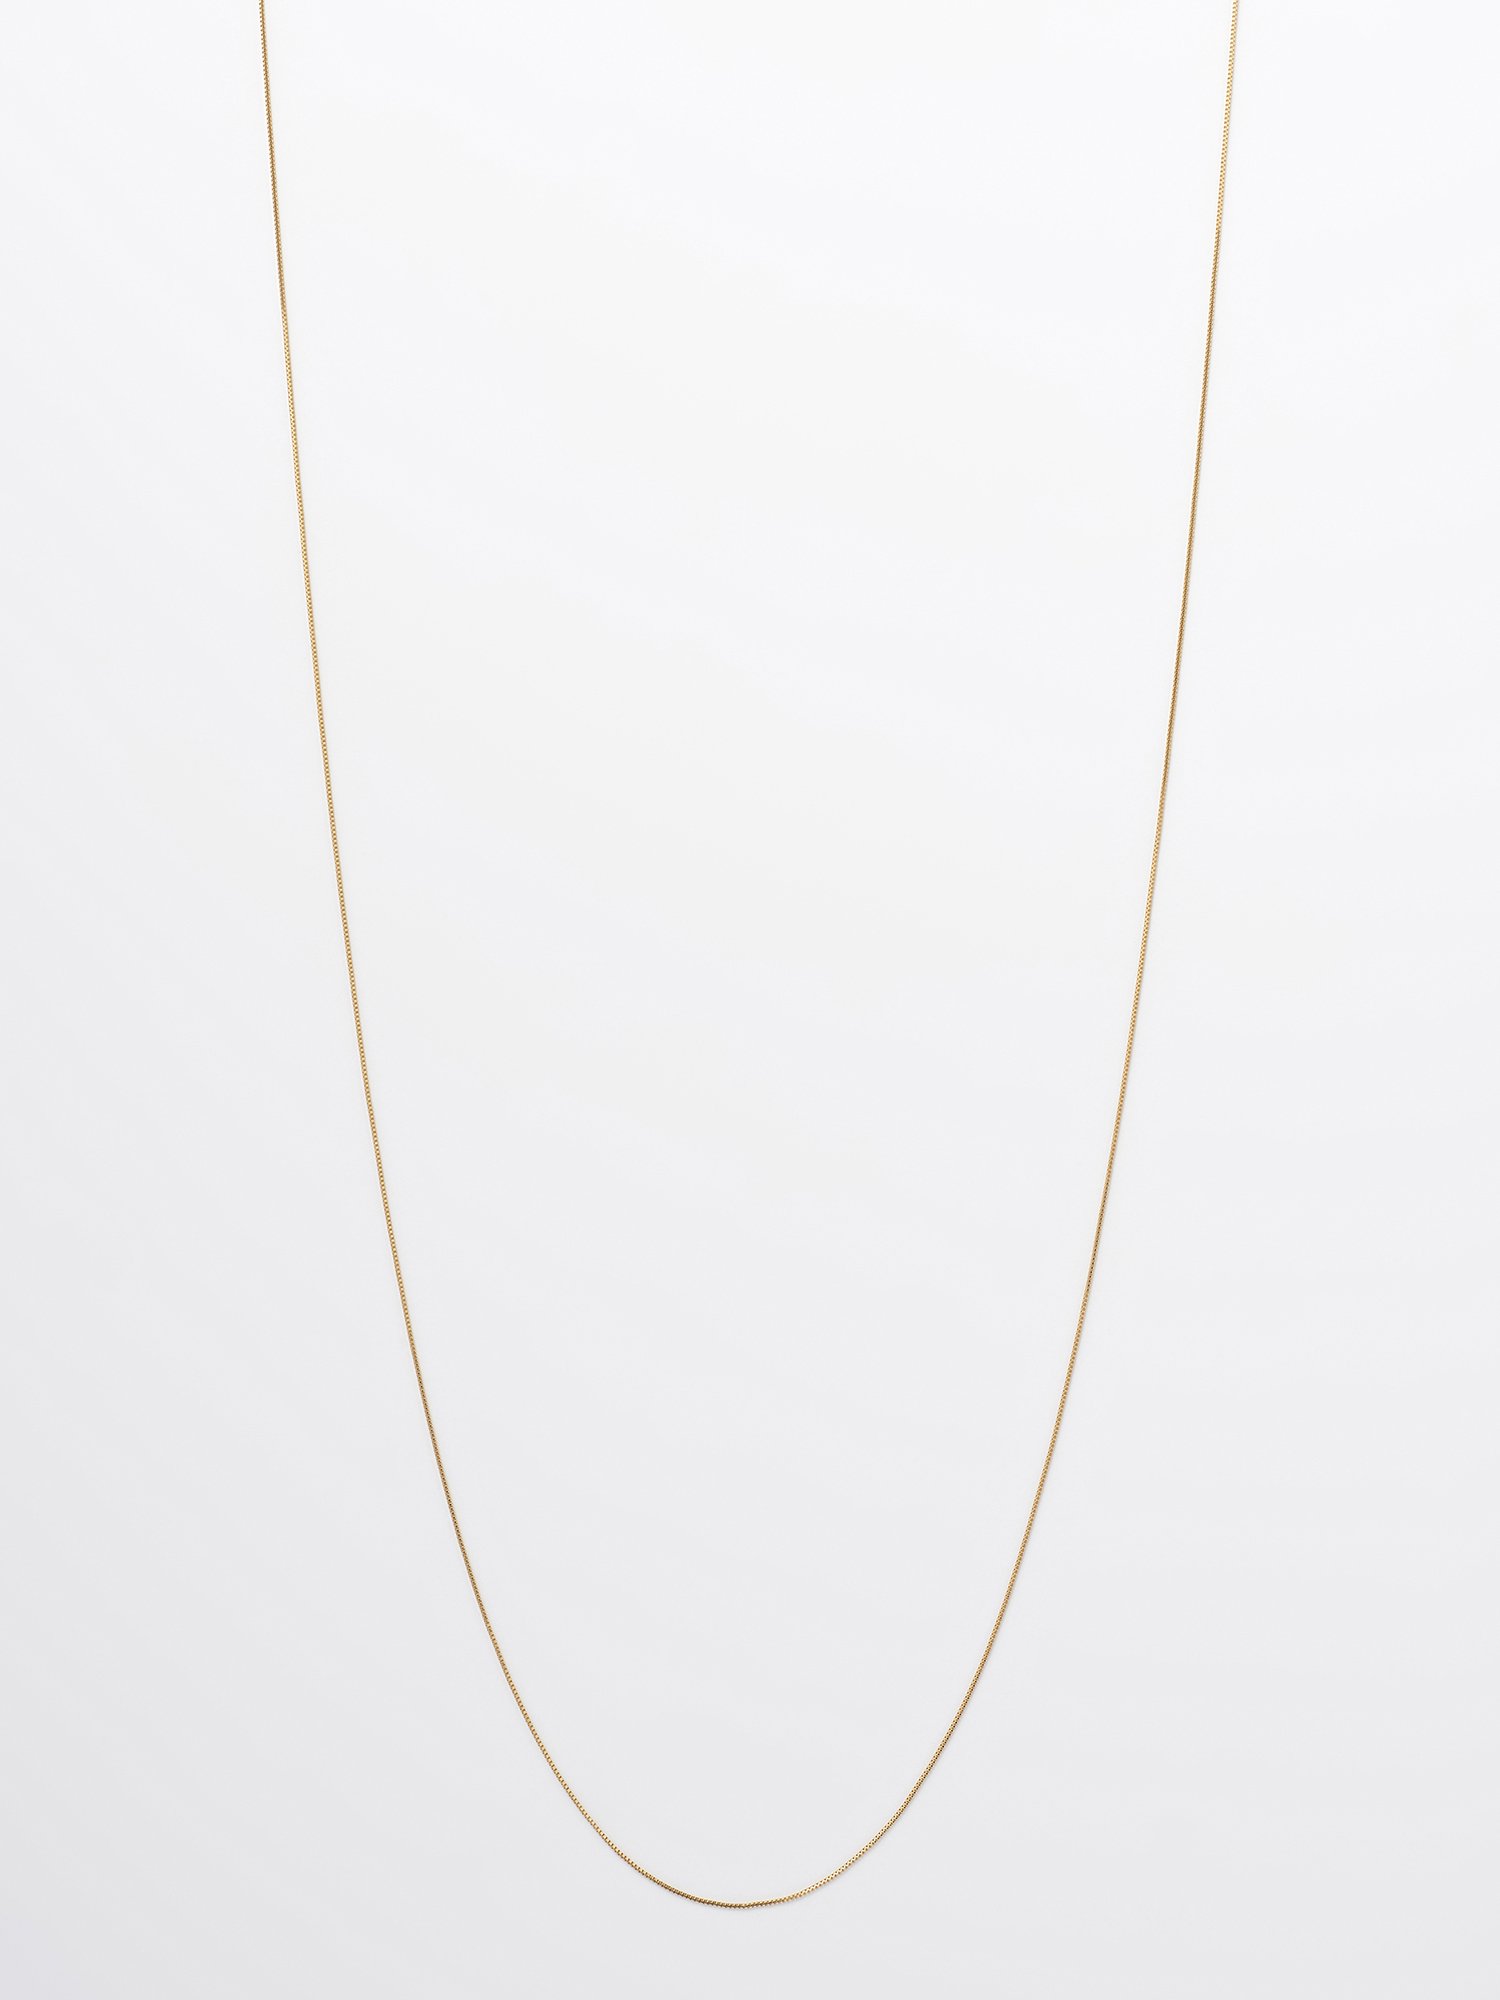 SOPHISTICATED VINTAGE / Gold line necklace / 950mm - GIGI Jewelry